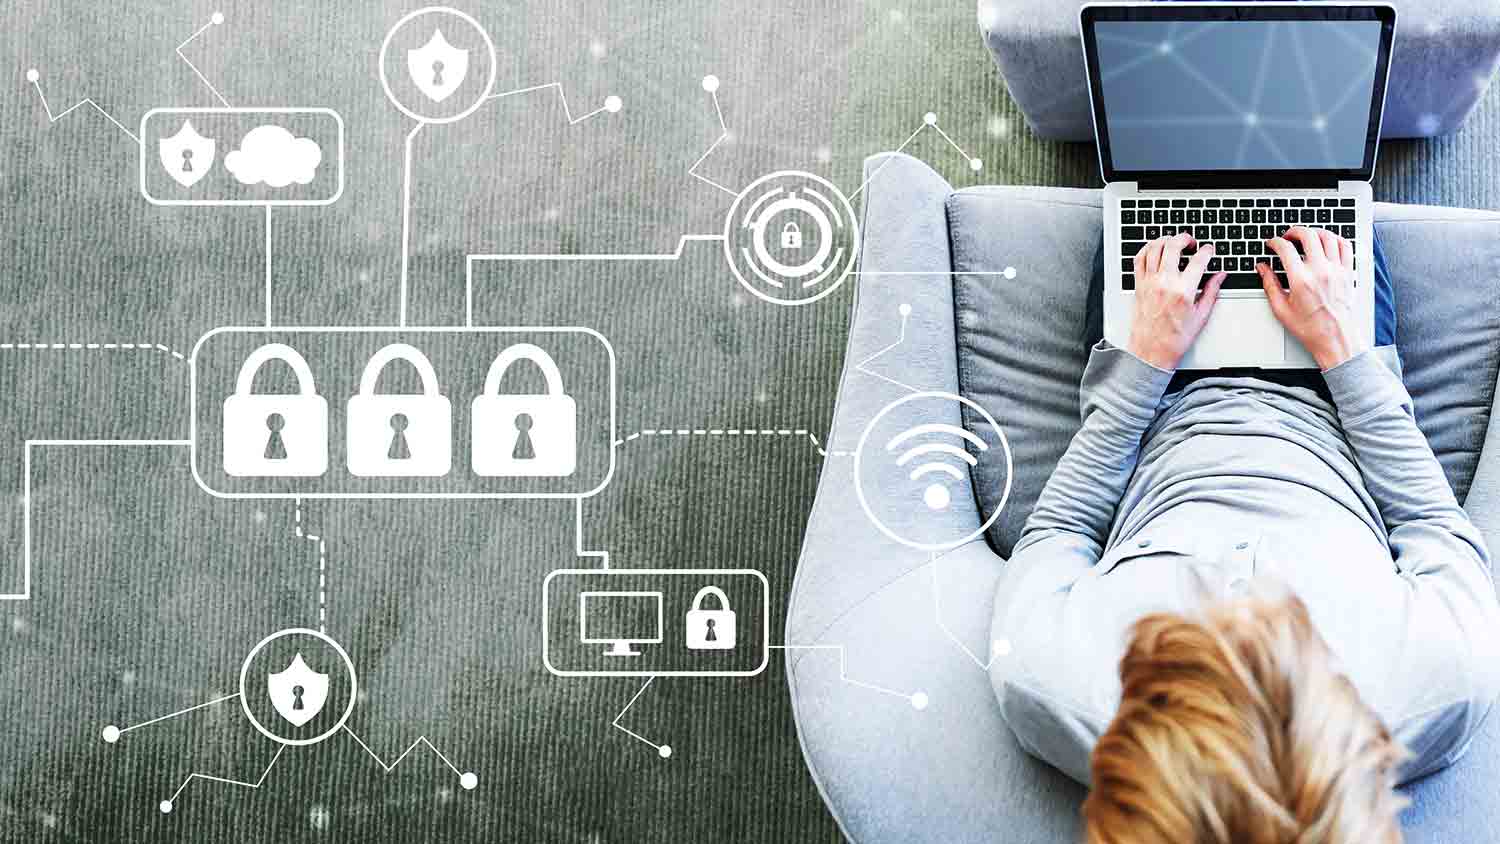 Recent Cybersecurity Developments in the APAC Region (June-July 2018)